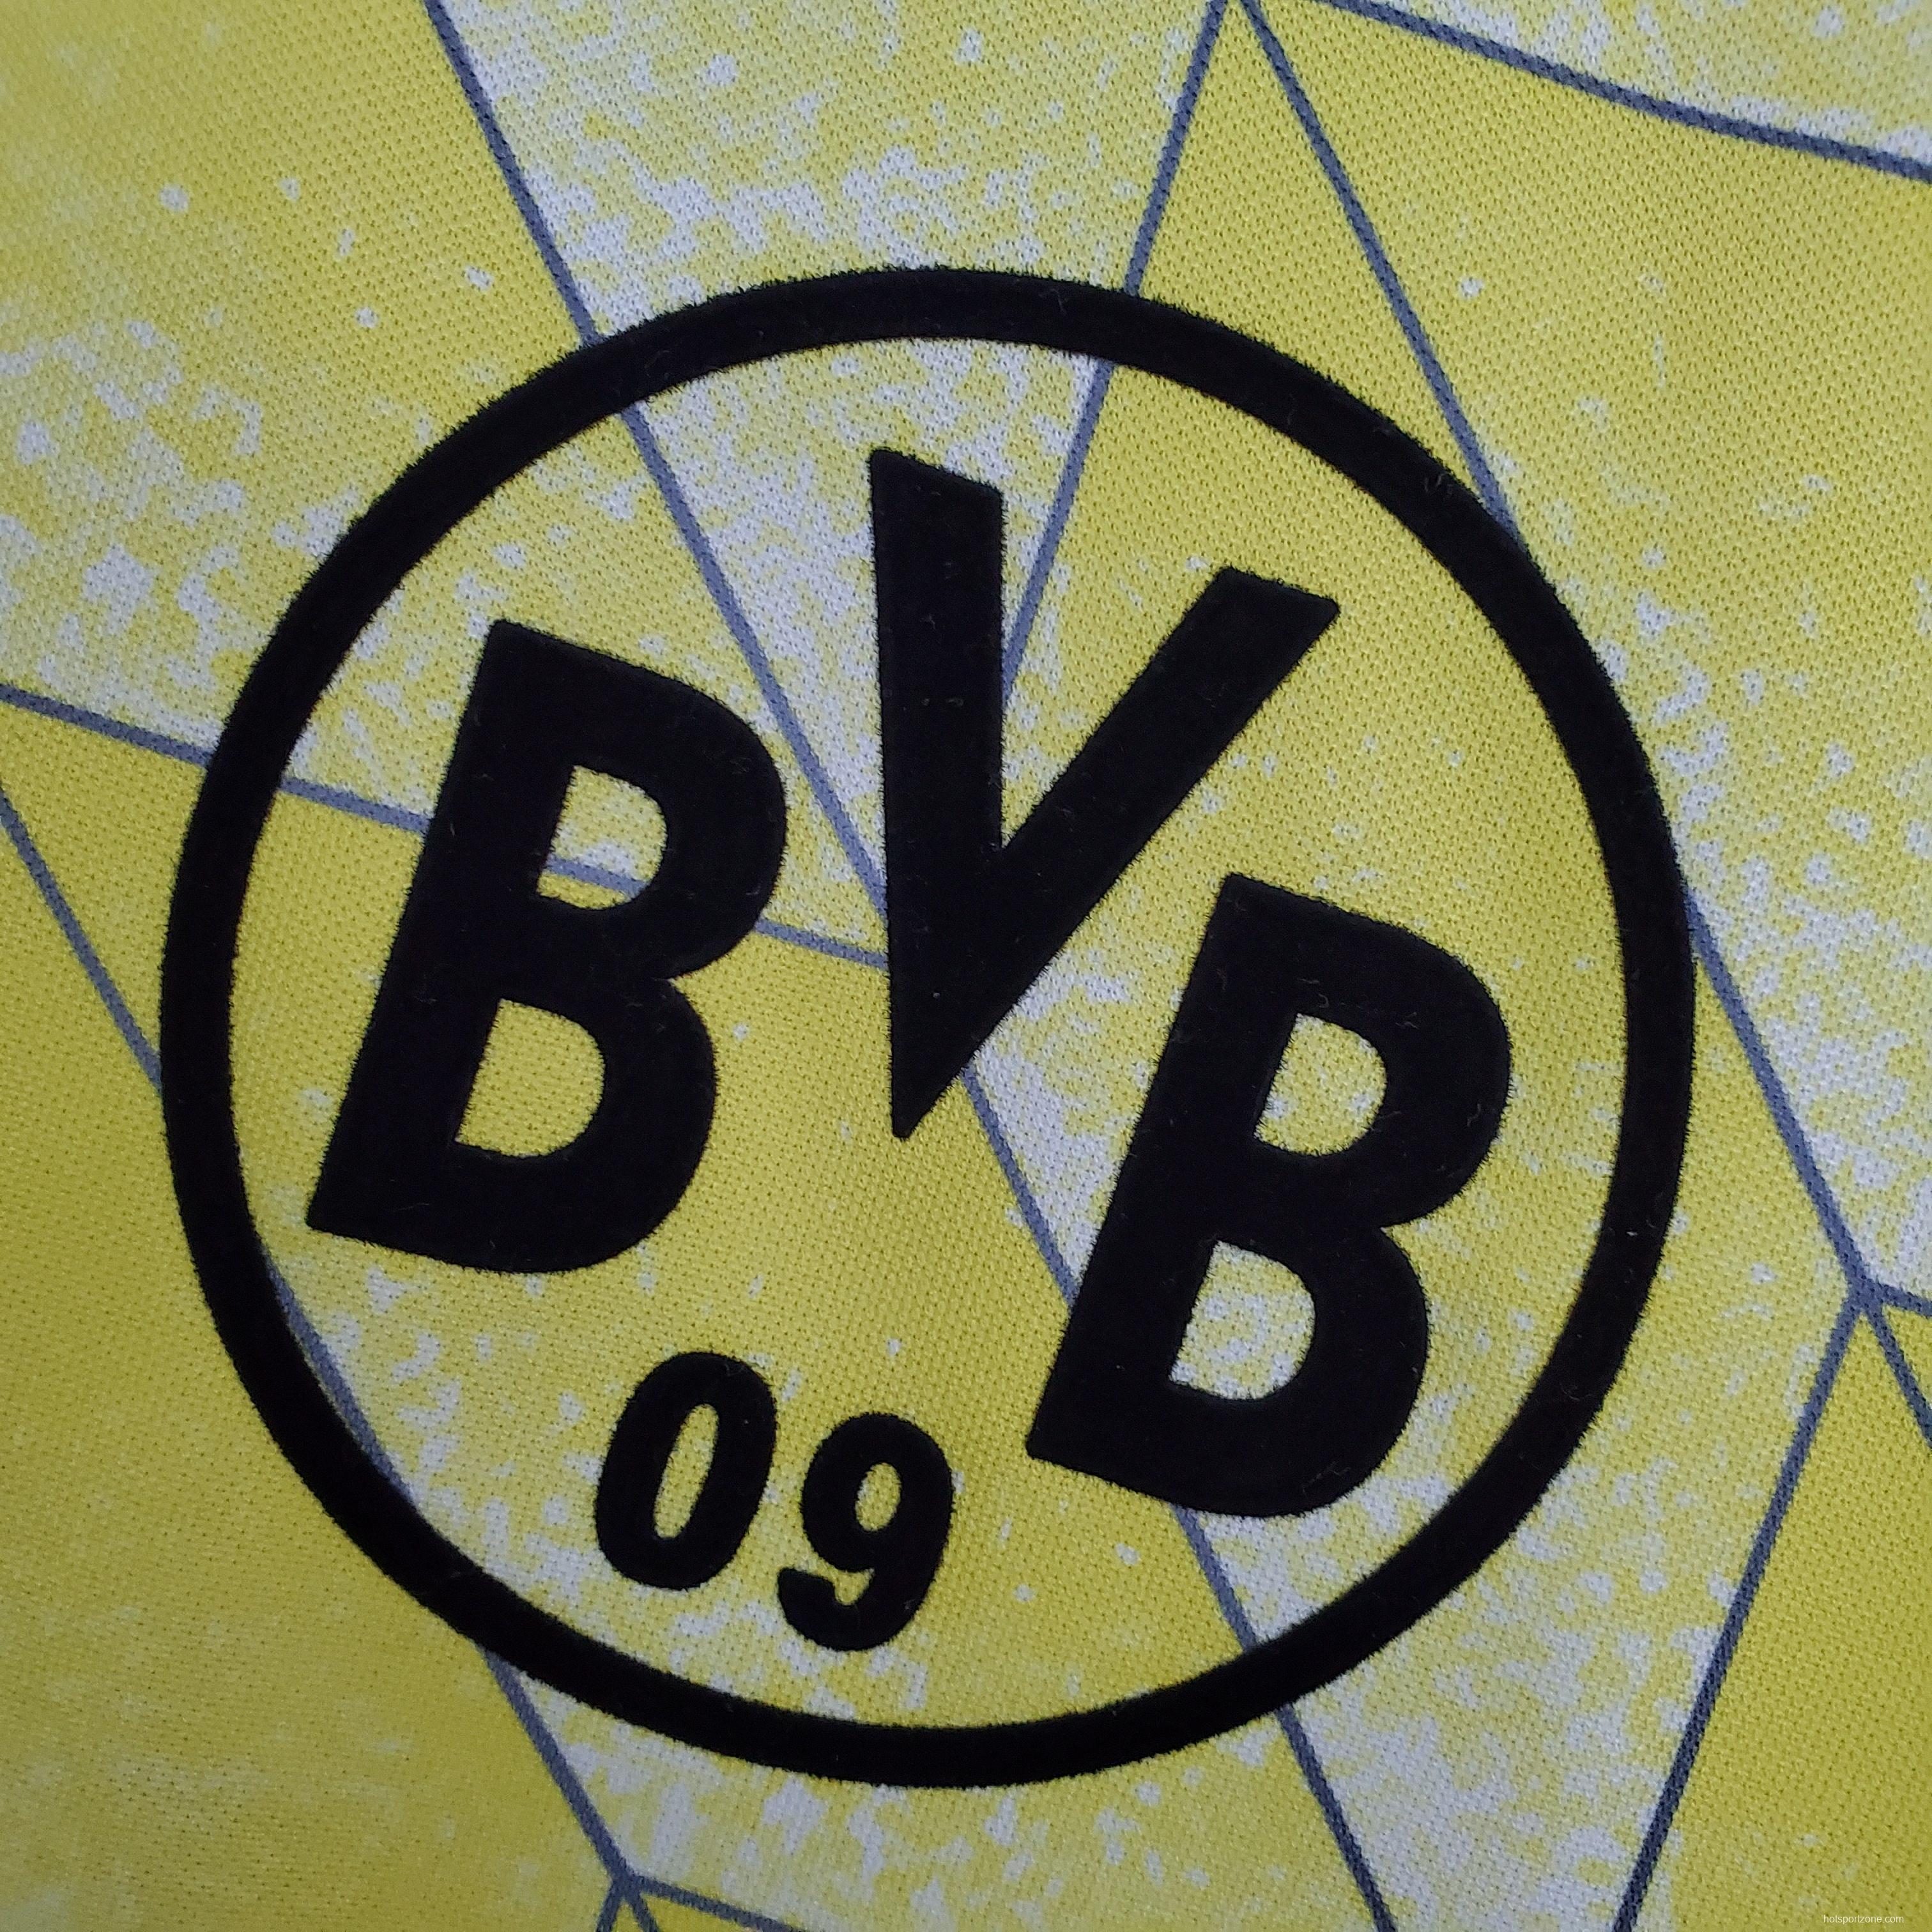 Retro Borussia Dortmund 1988 home Soccer Jersey